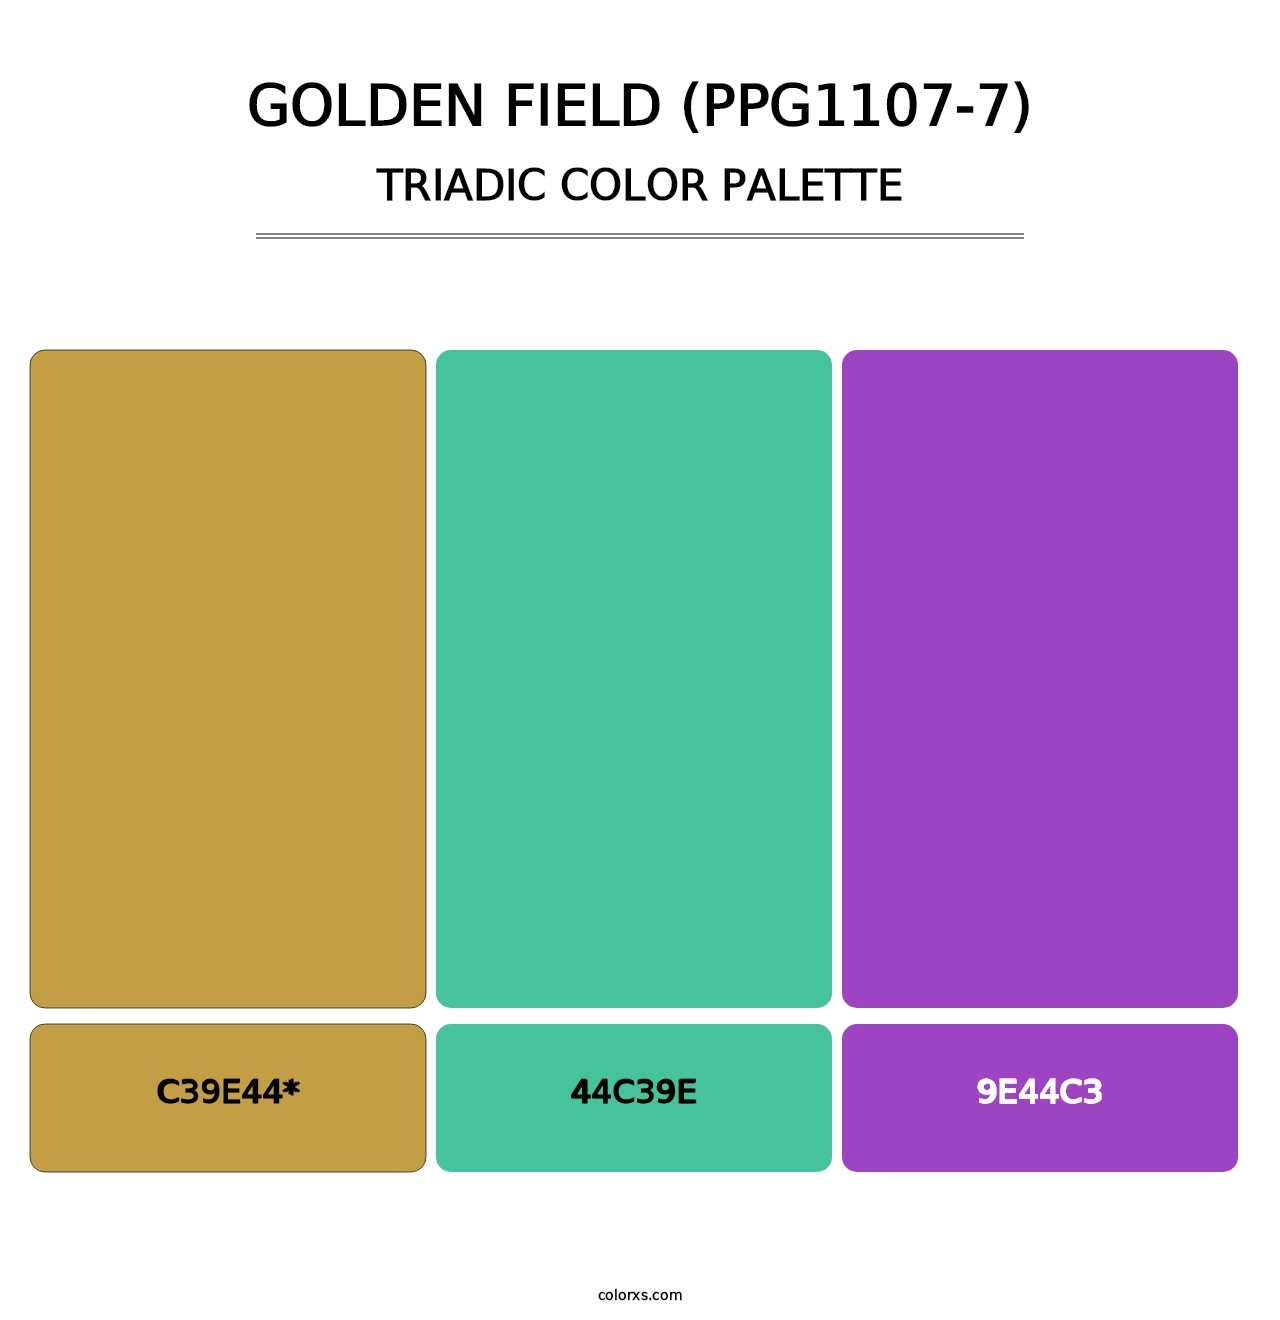 Golden Field (PPG1107-7) - Triadic Color Palette